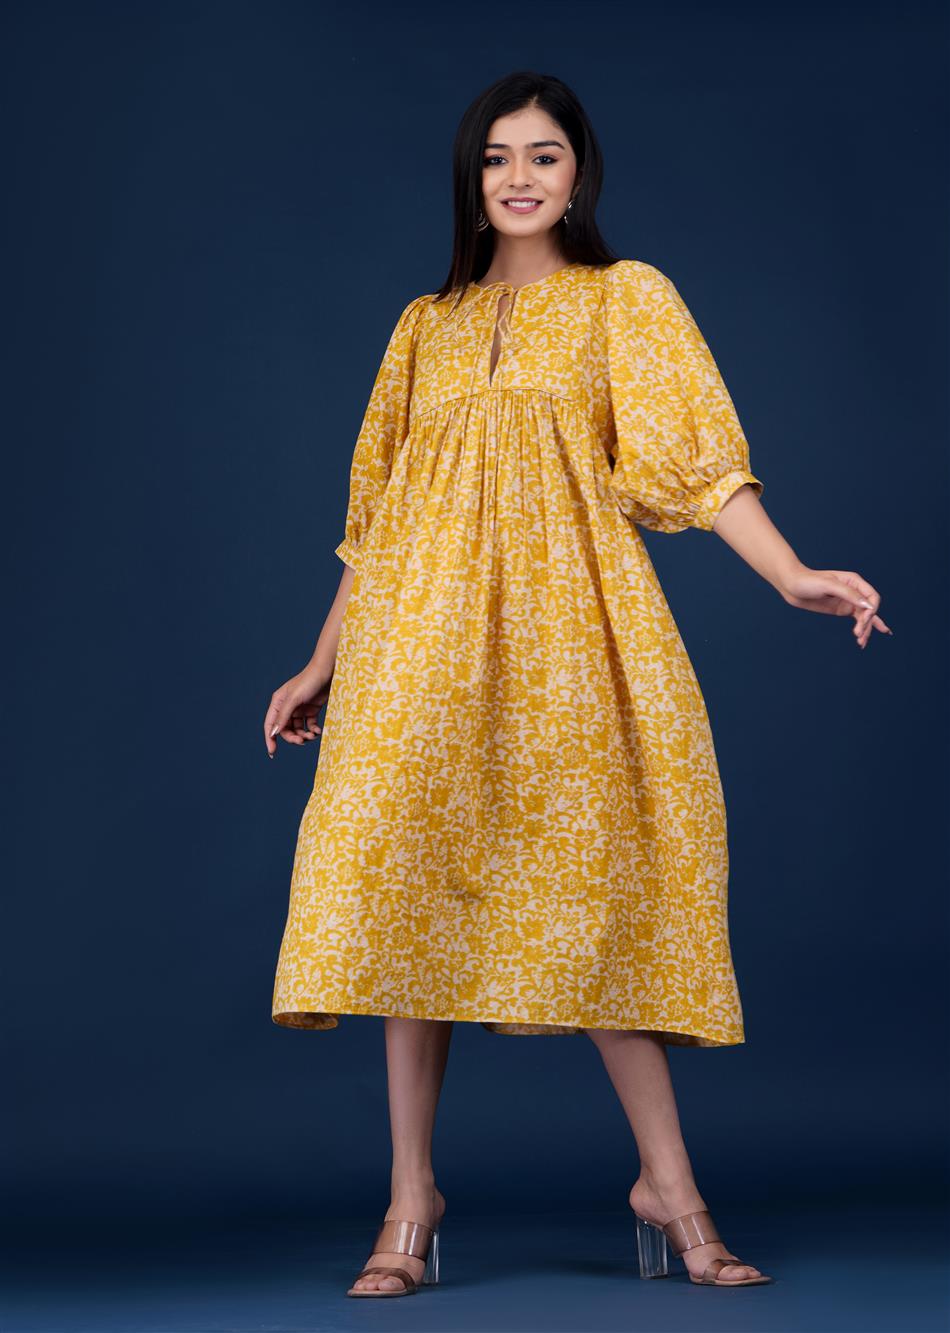 Yellow Maxi Dress